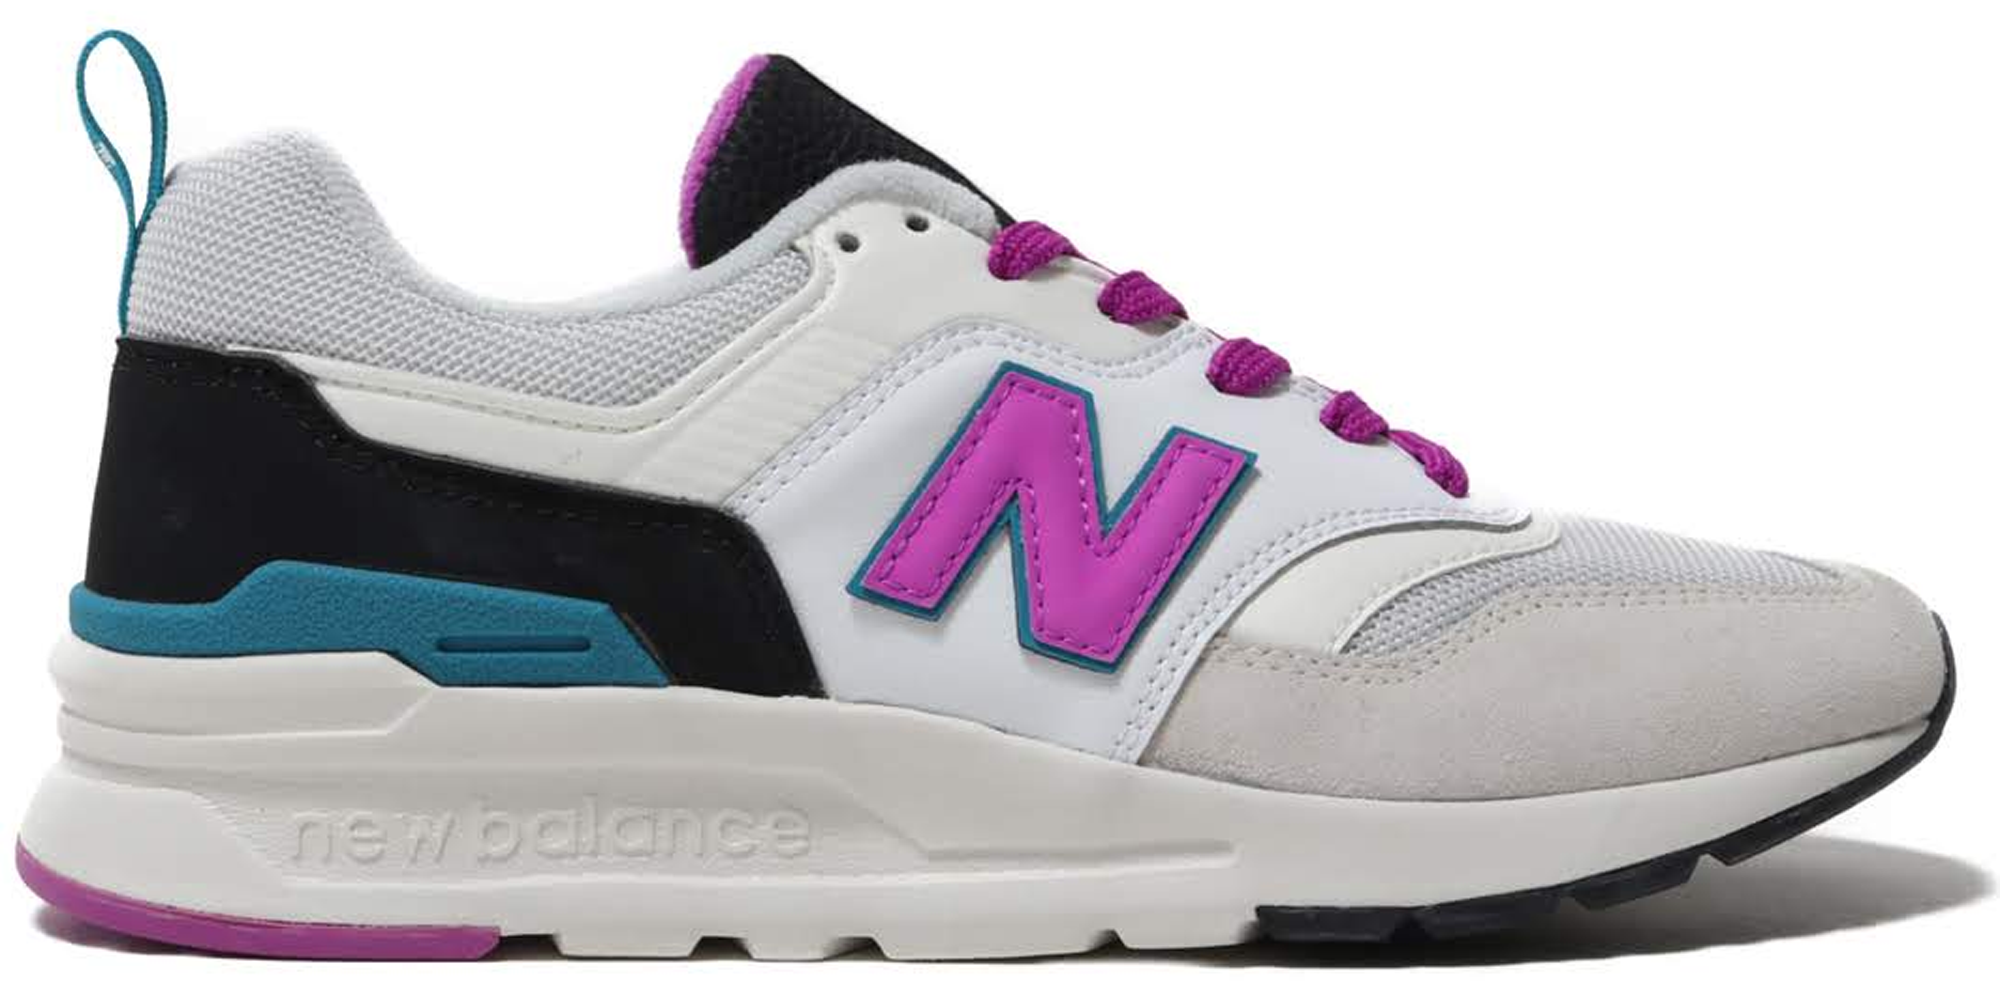 new balance 997h white purple